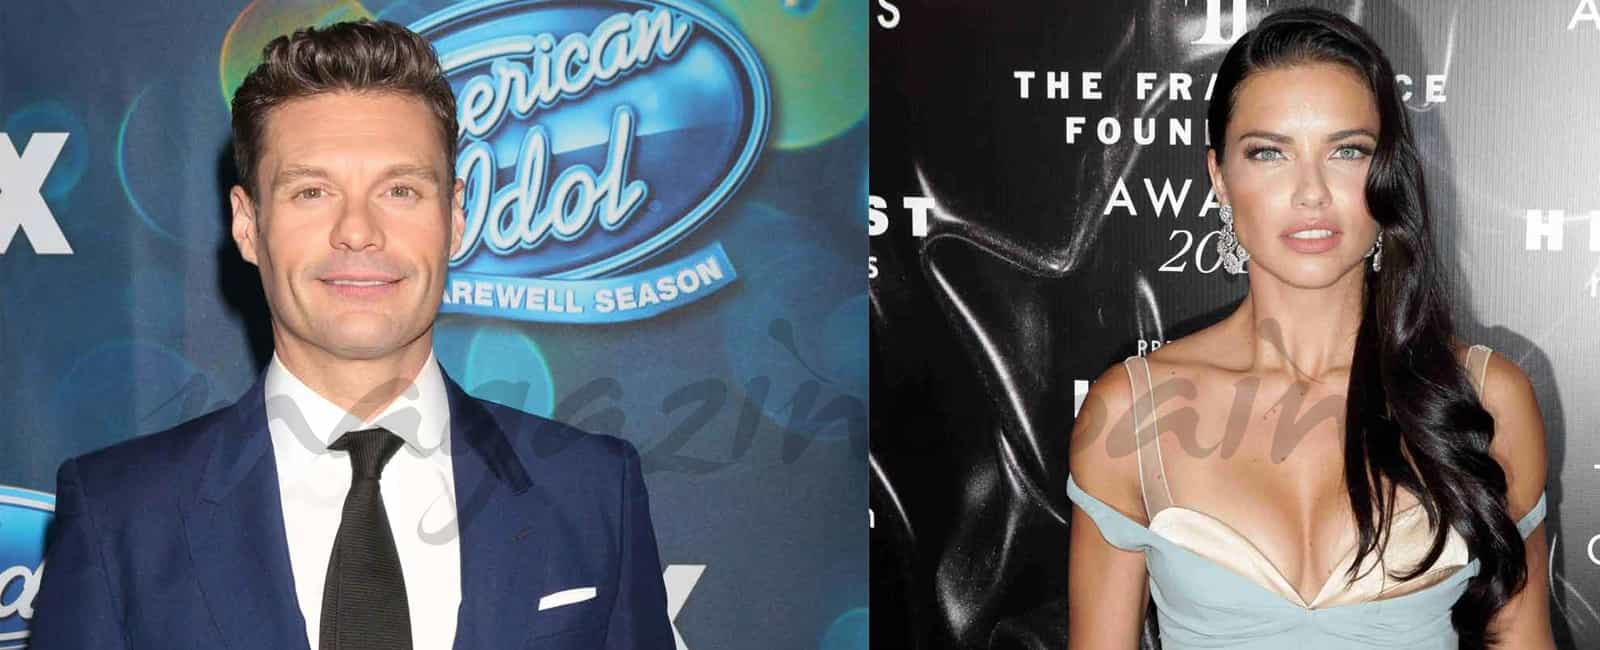 Adriana Lima y Ryan Seacrest, nueva pareja